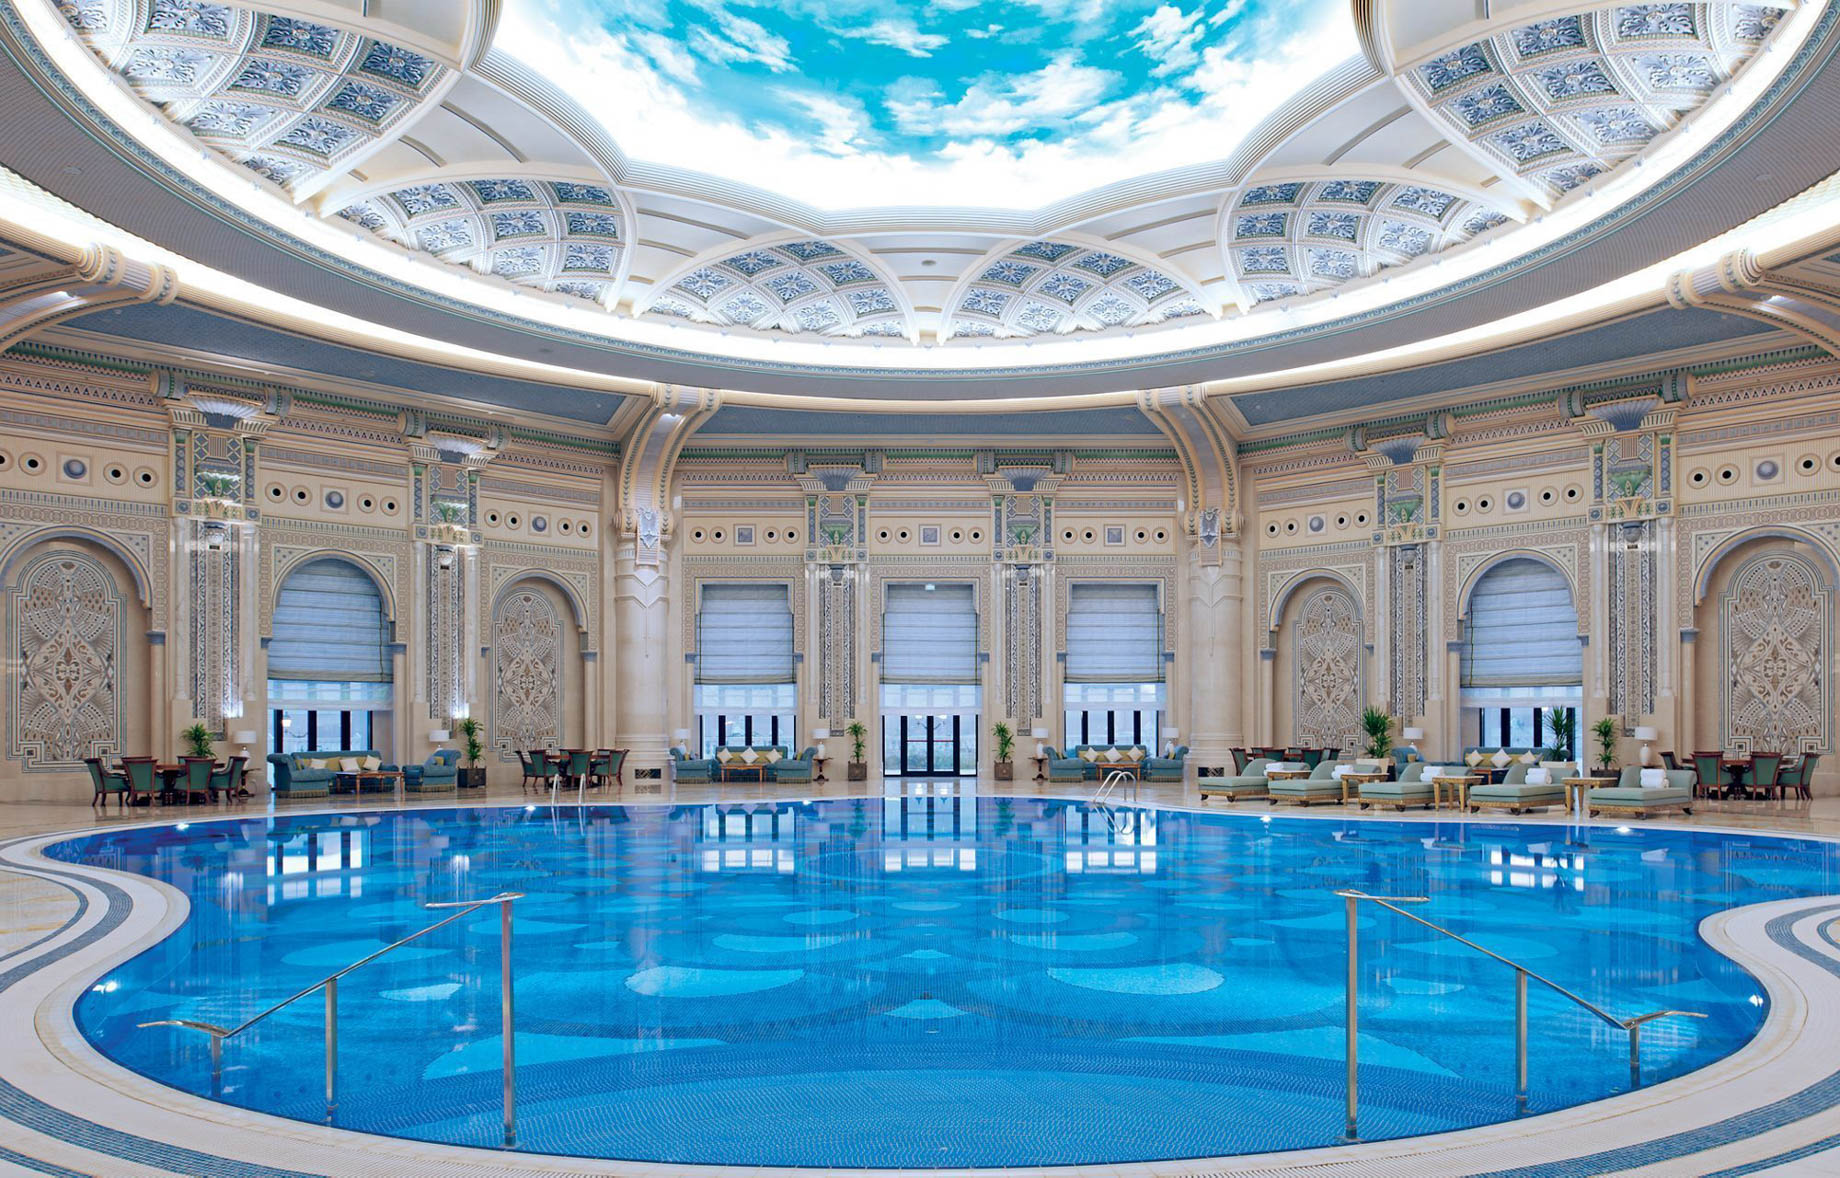 The Ritz-Carlton, Riyadh Hotel - Riyadh, Saudi Arabia - Interior Pool